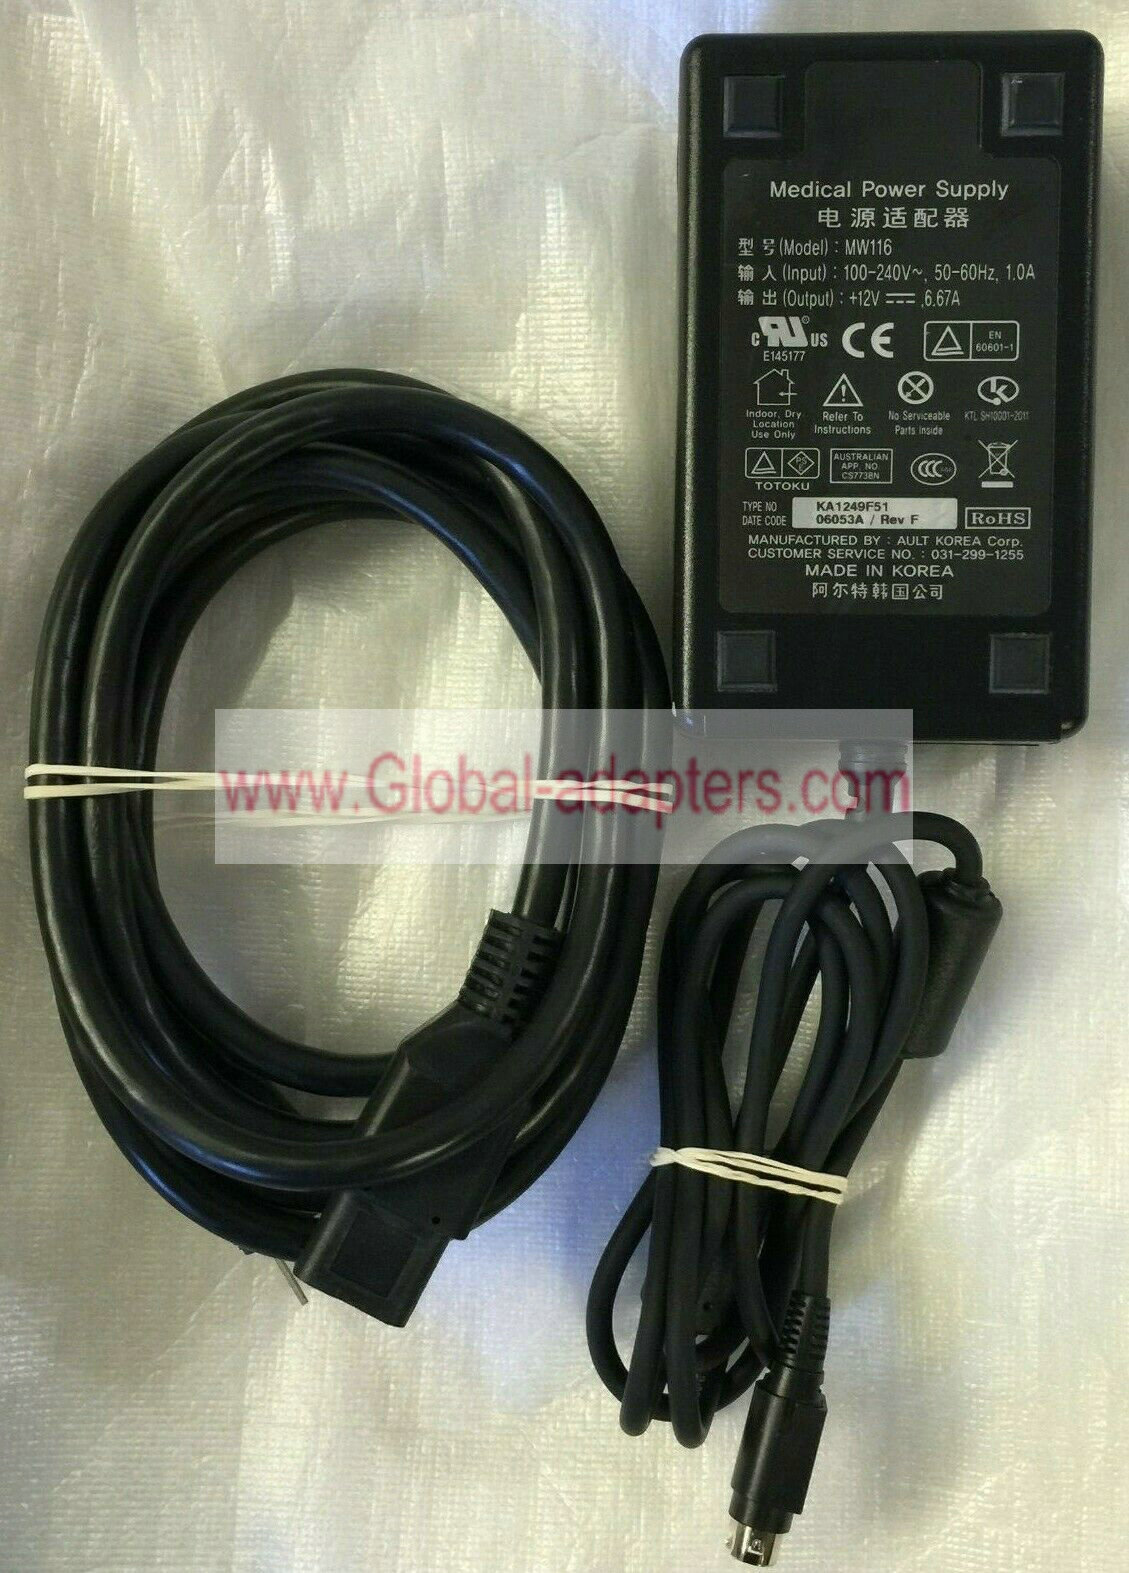 New Totoku/Ault MW116 KA1249F51 Medical Power Supply 12v 6.67a 4 PIN ac adapter